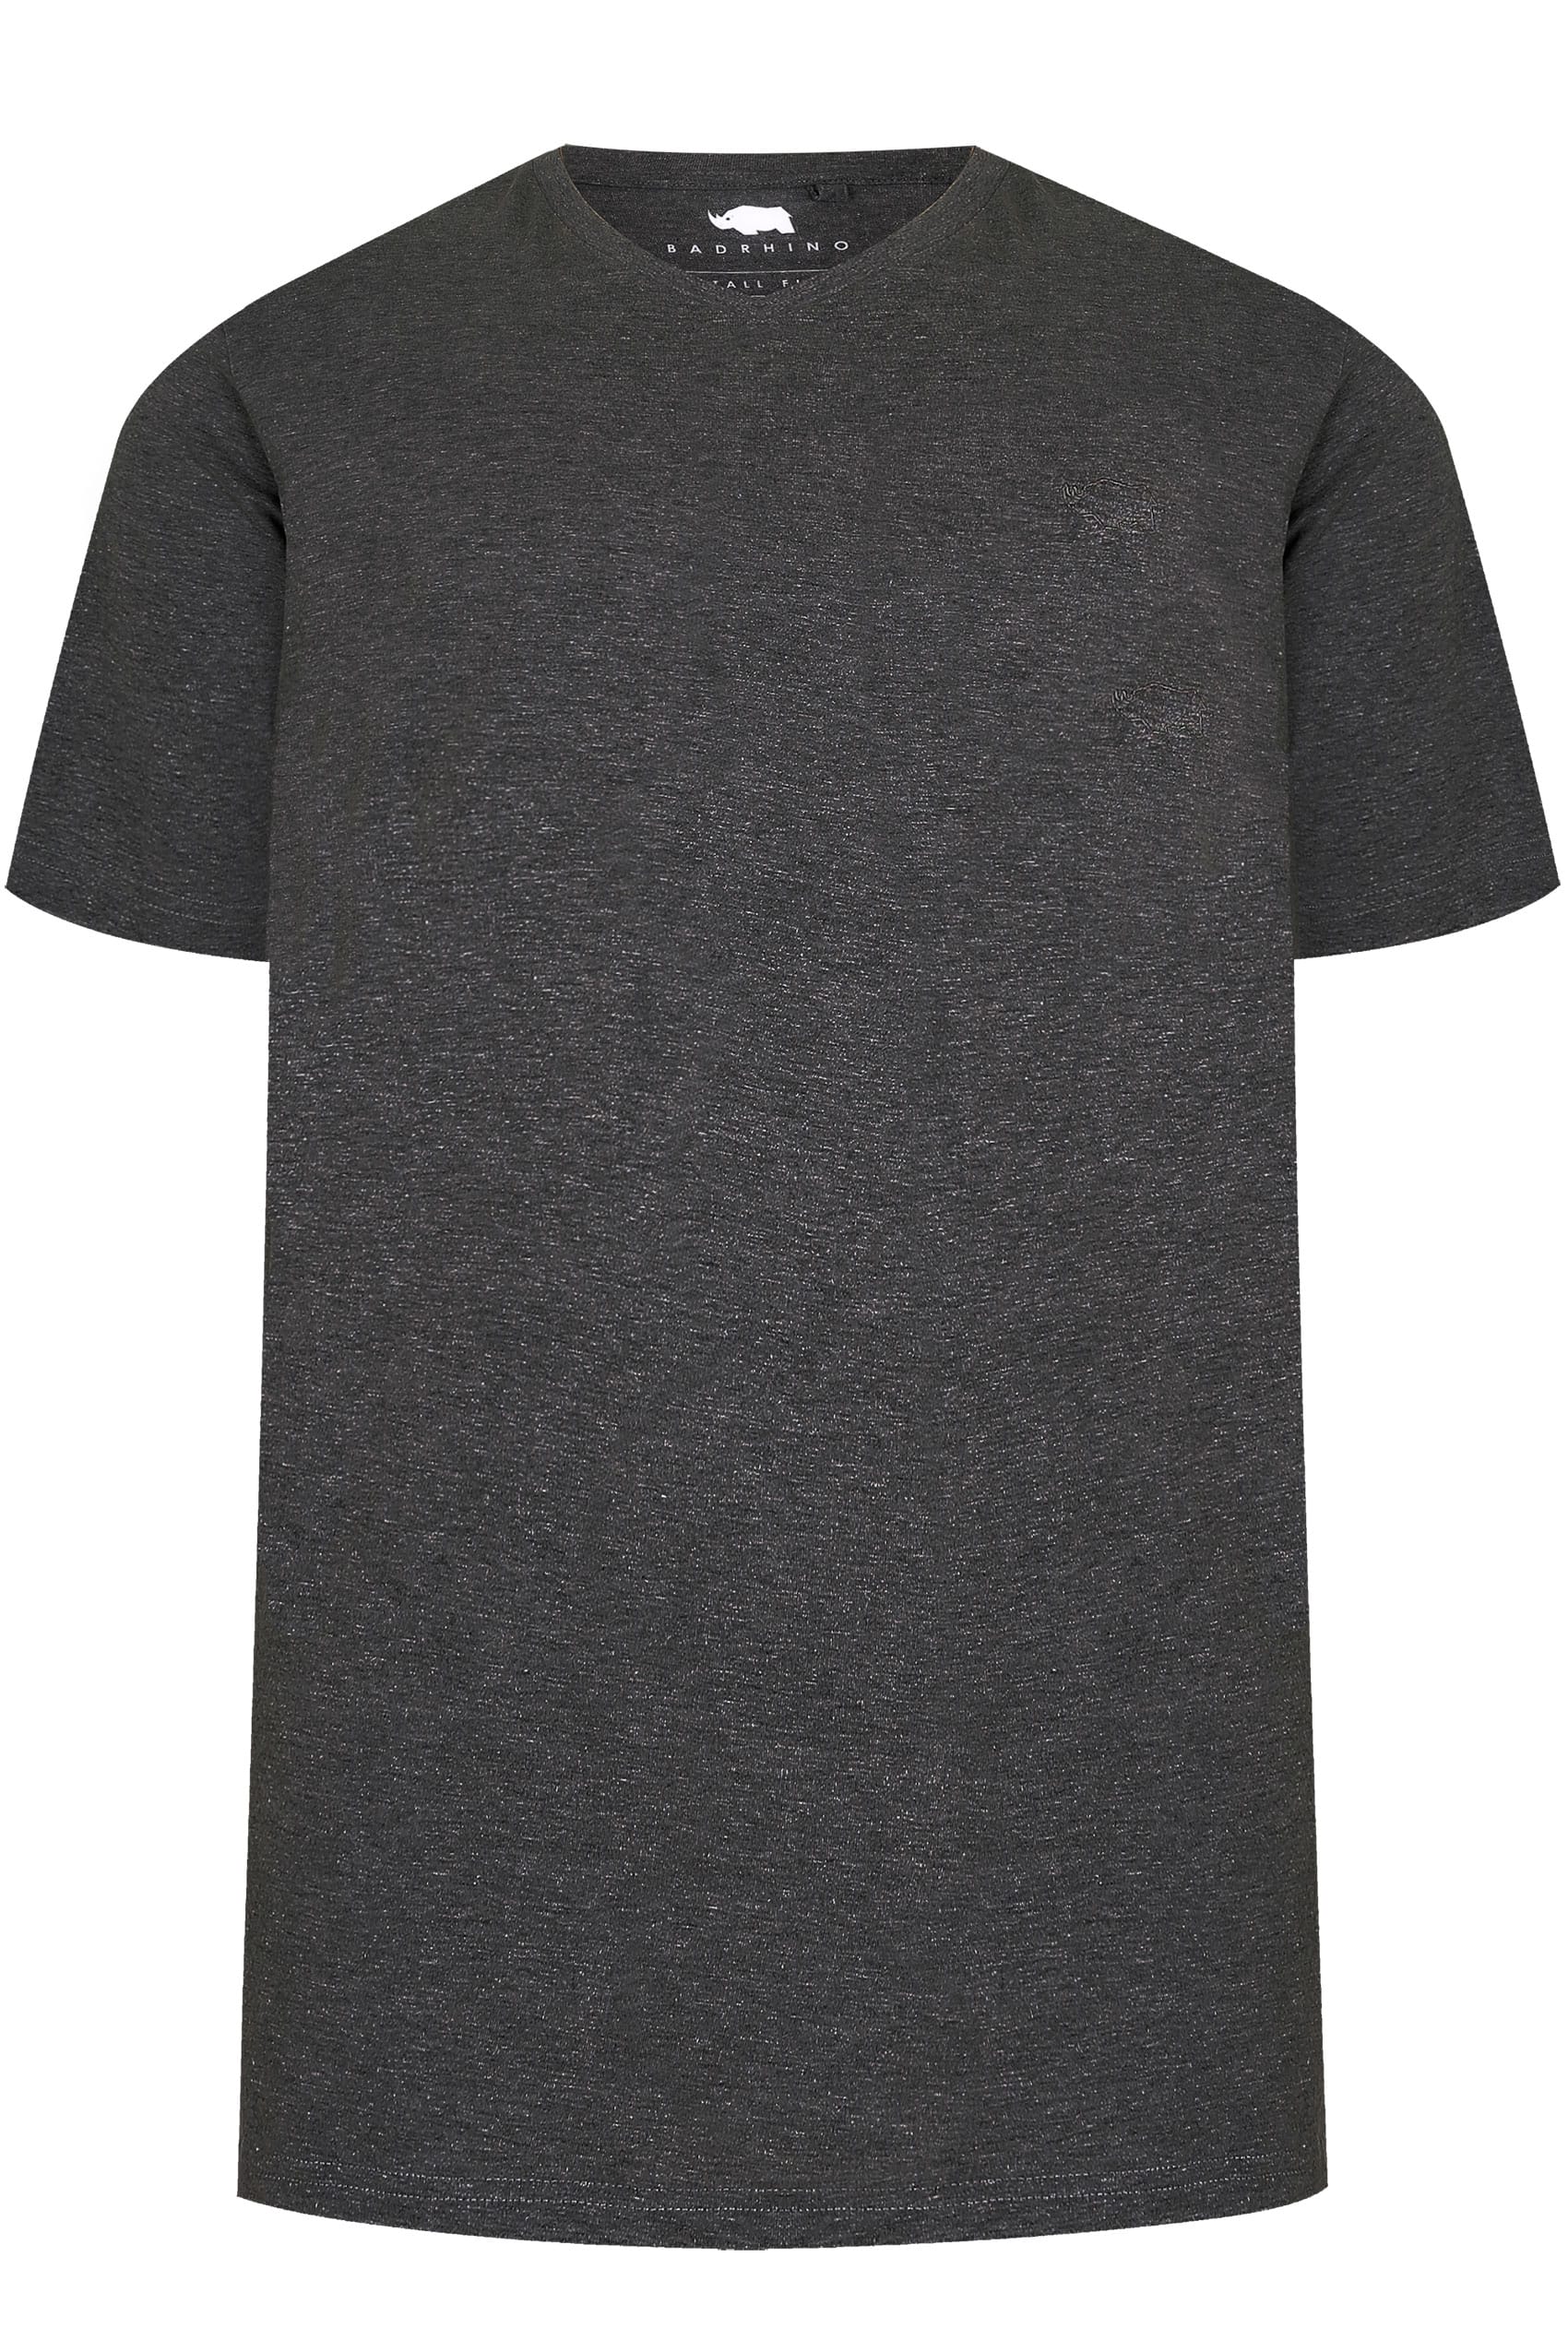 Download BadRhino Charcoal Grey V-Neck Basic T-Shirt